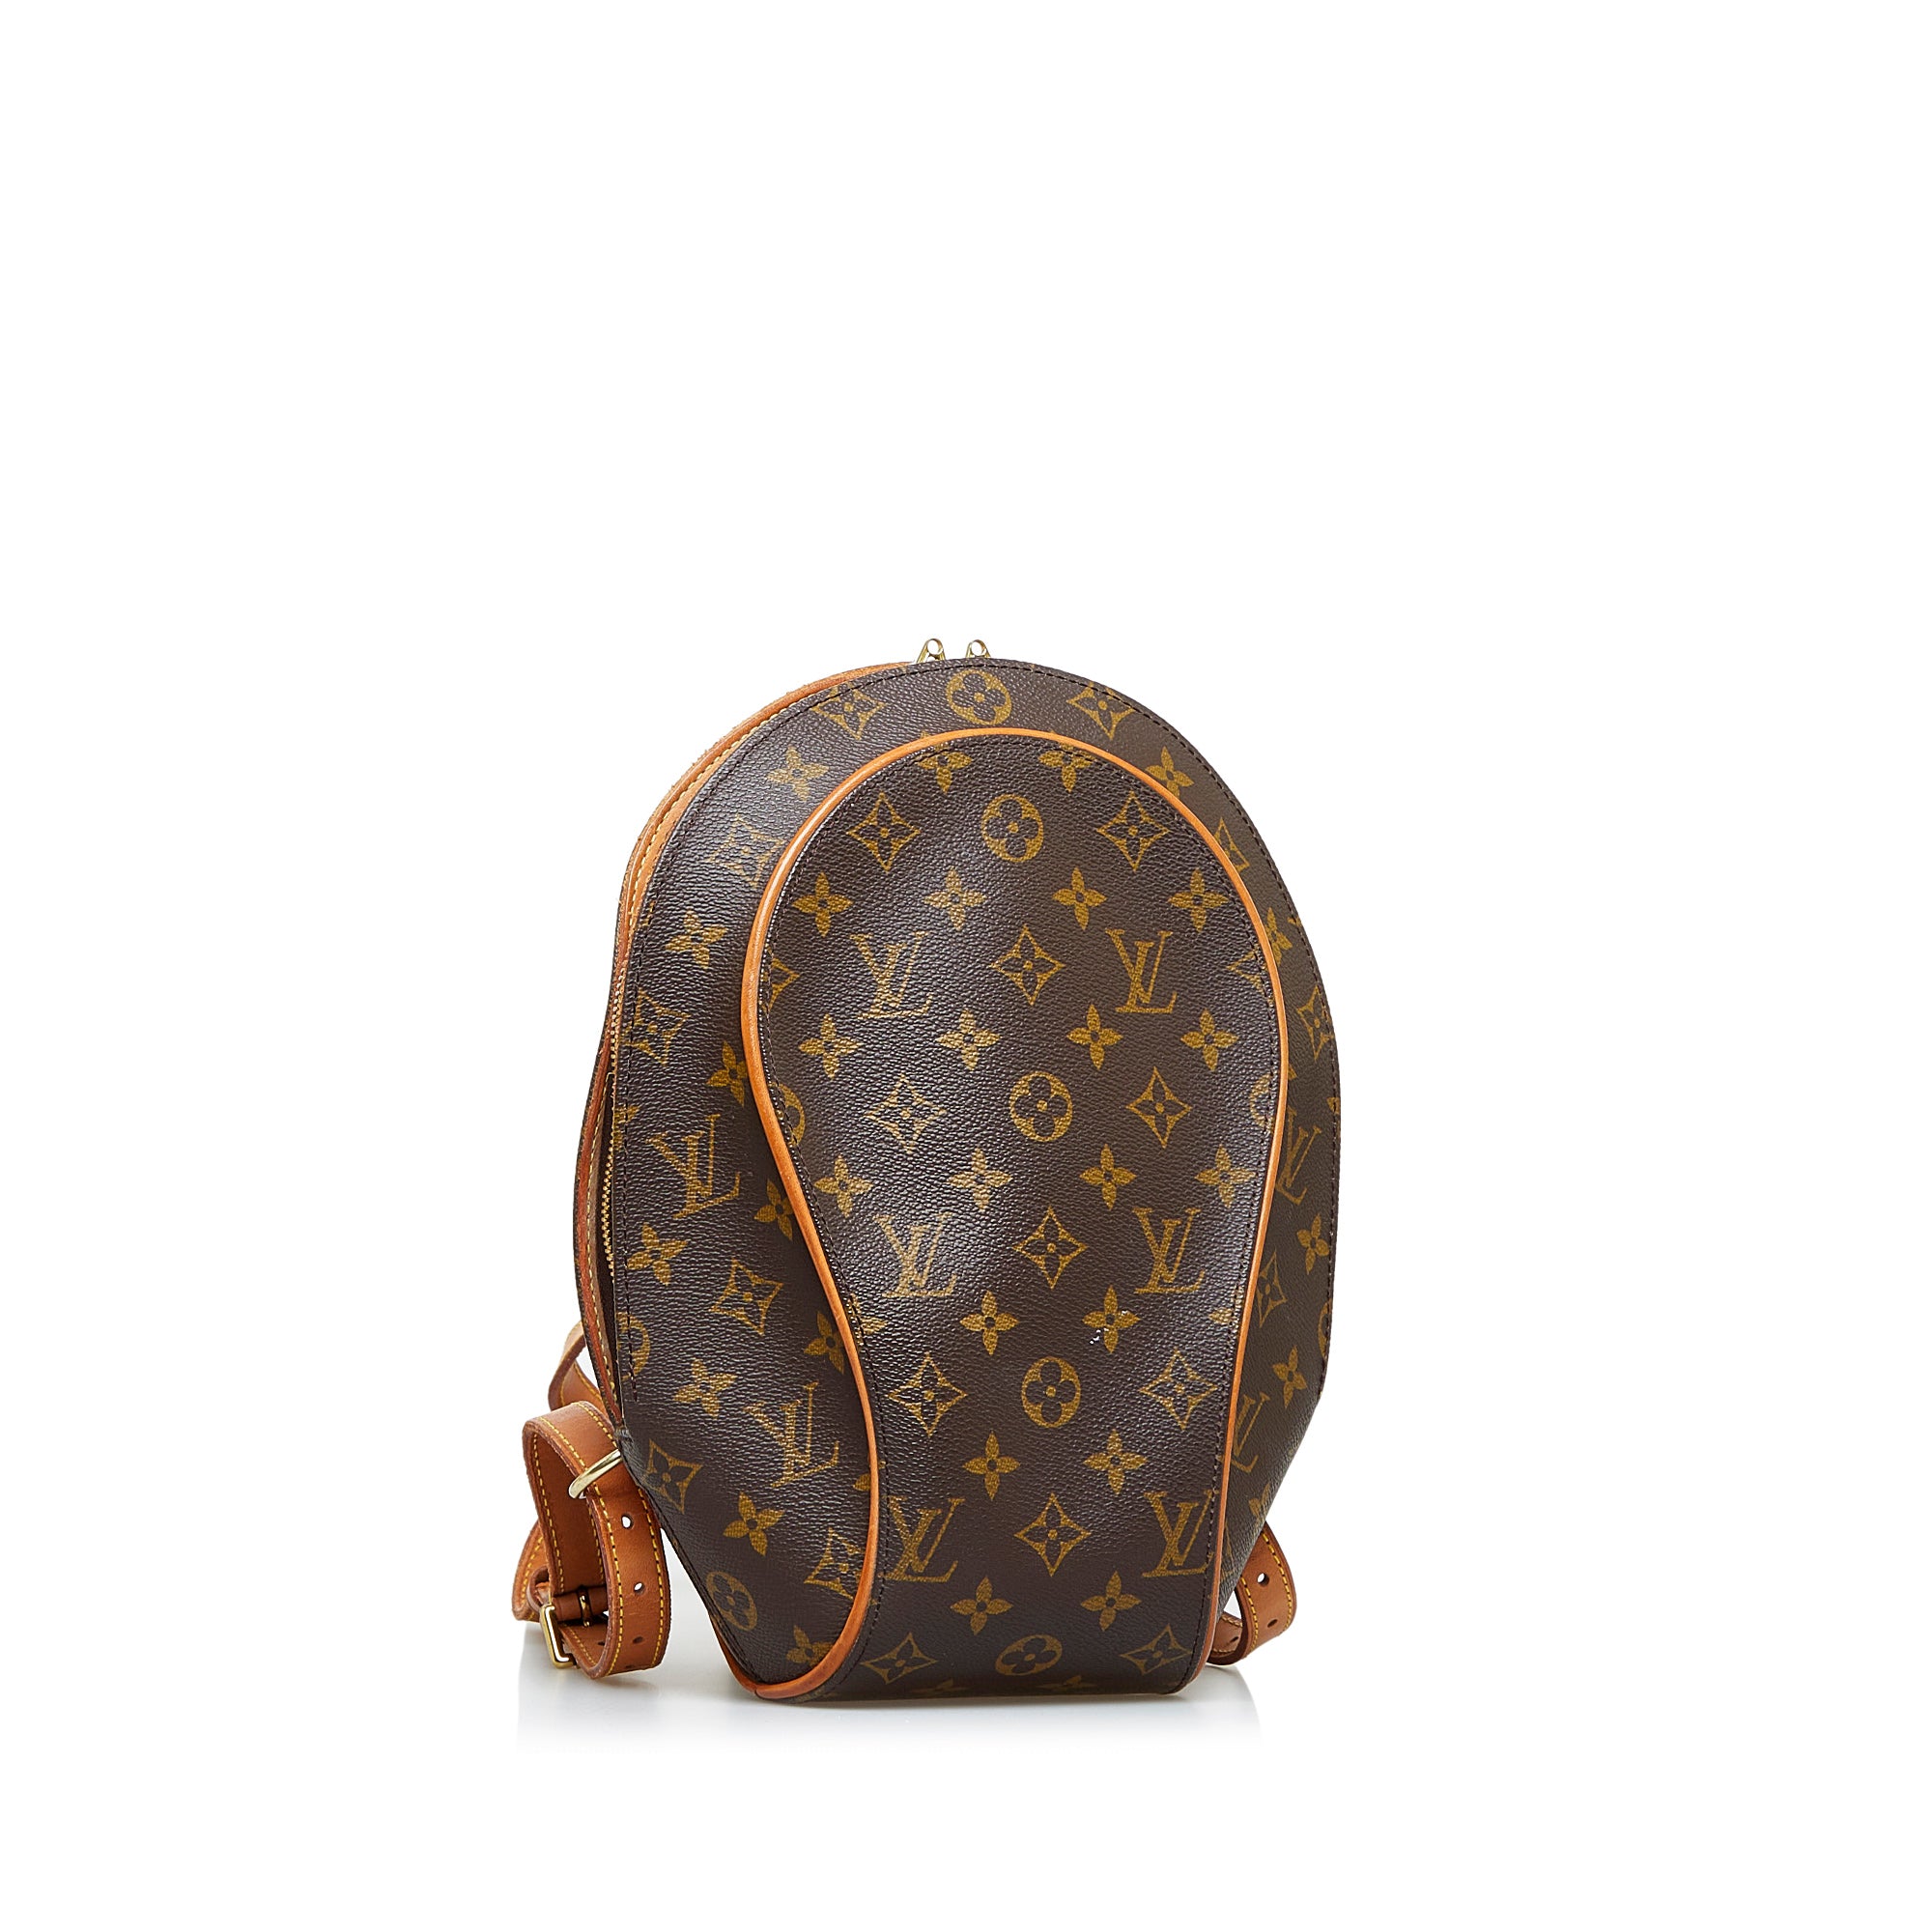 Louis Vuitton Ellipse Sac A Dos in Monogram Handbag - Authentic Pre-Owned Designer Handbags